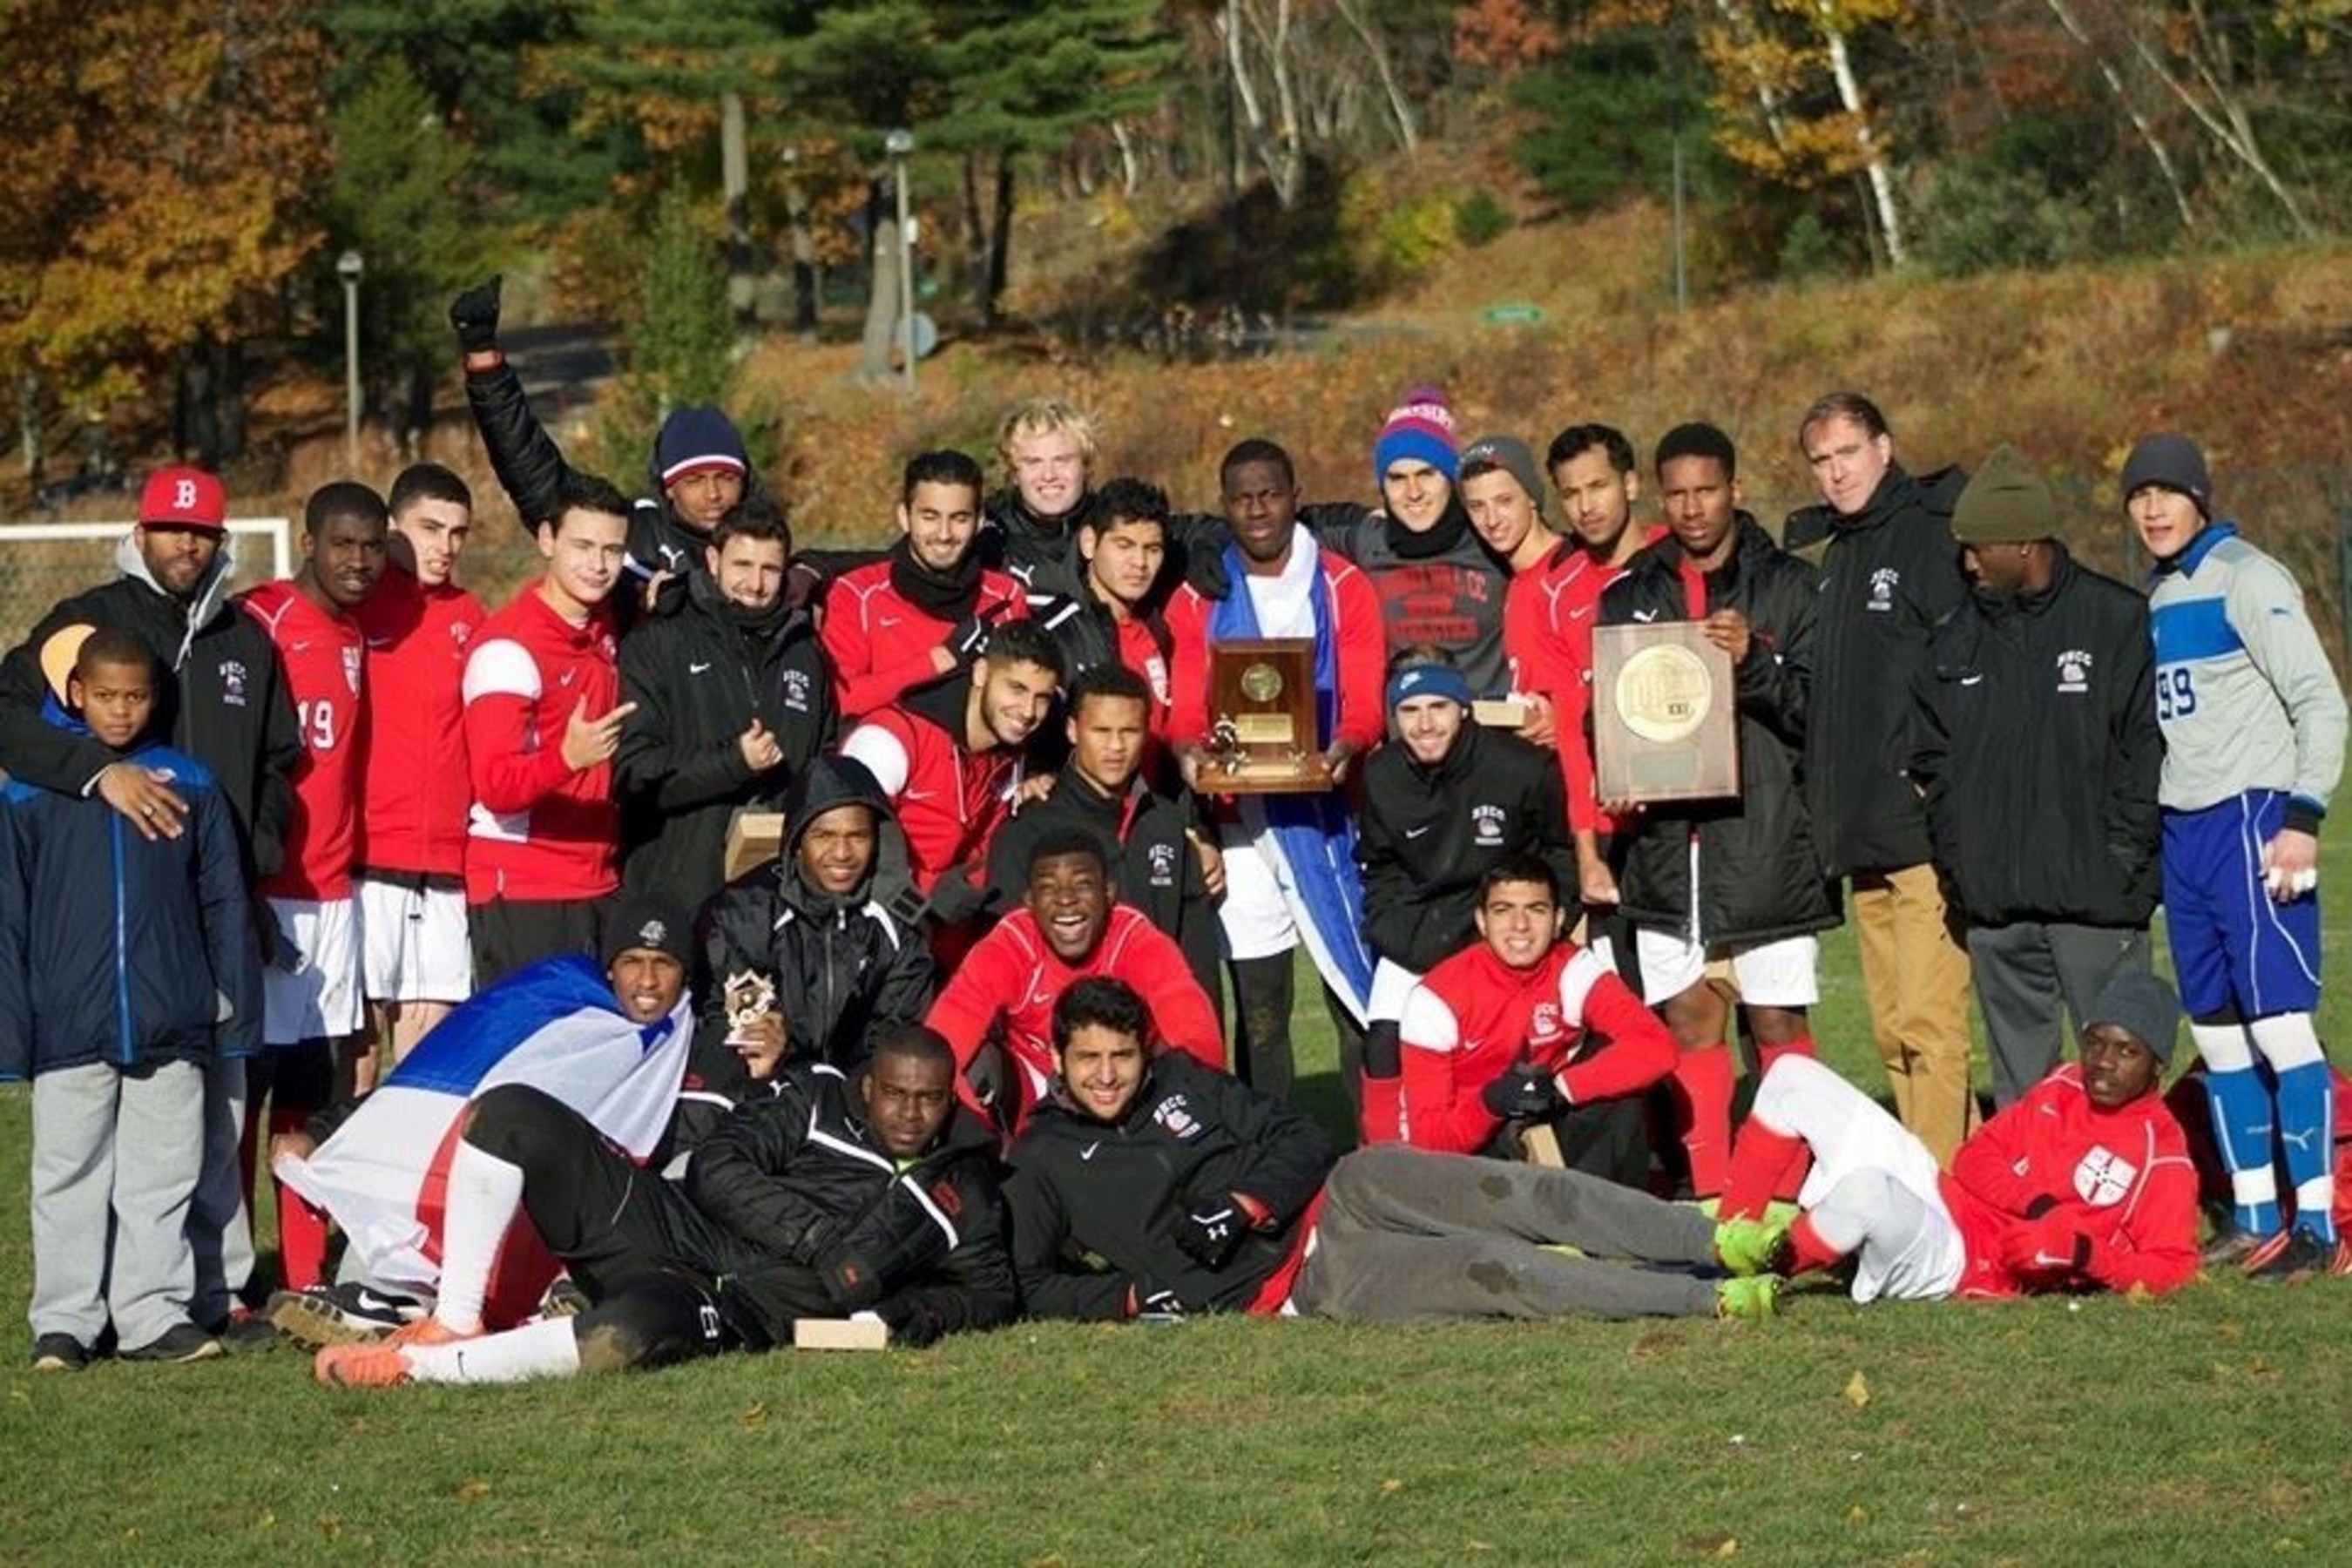 National Junior College Athletic Association (NJCAA) Regional men's soccer champions.